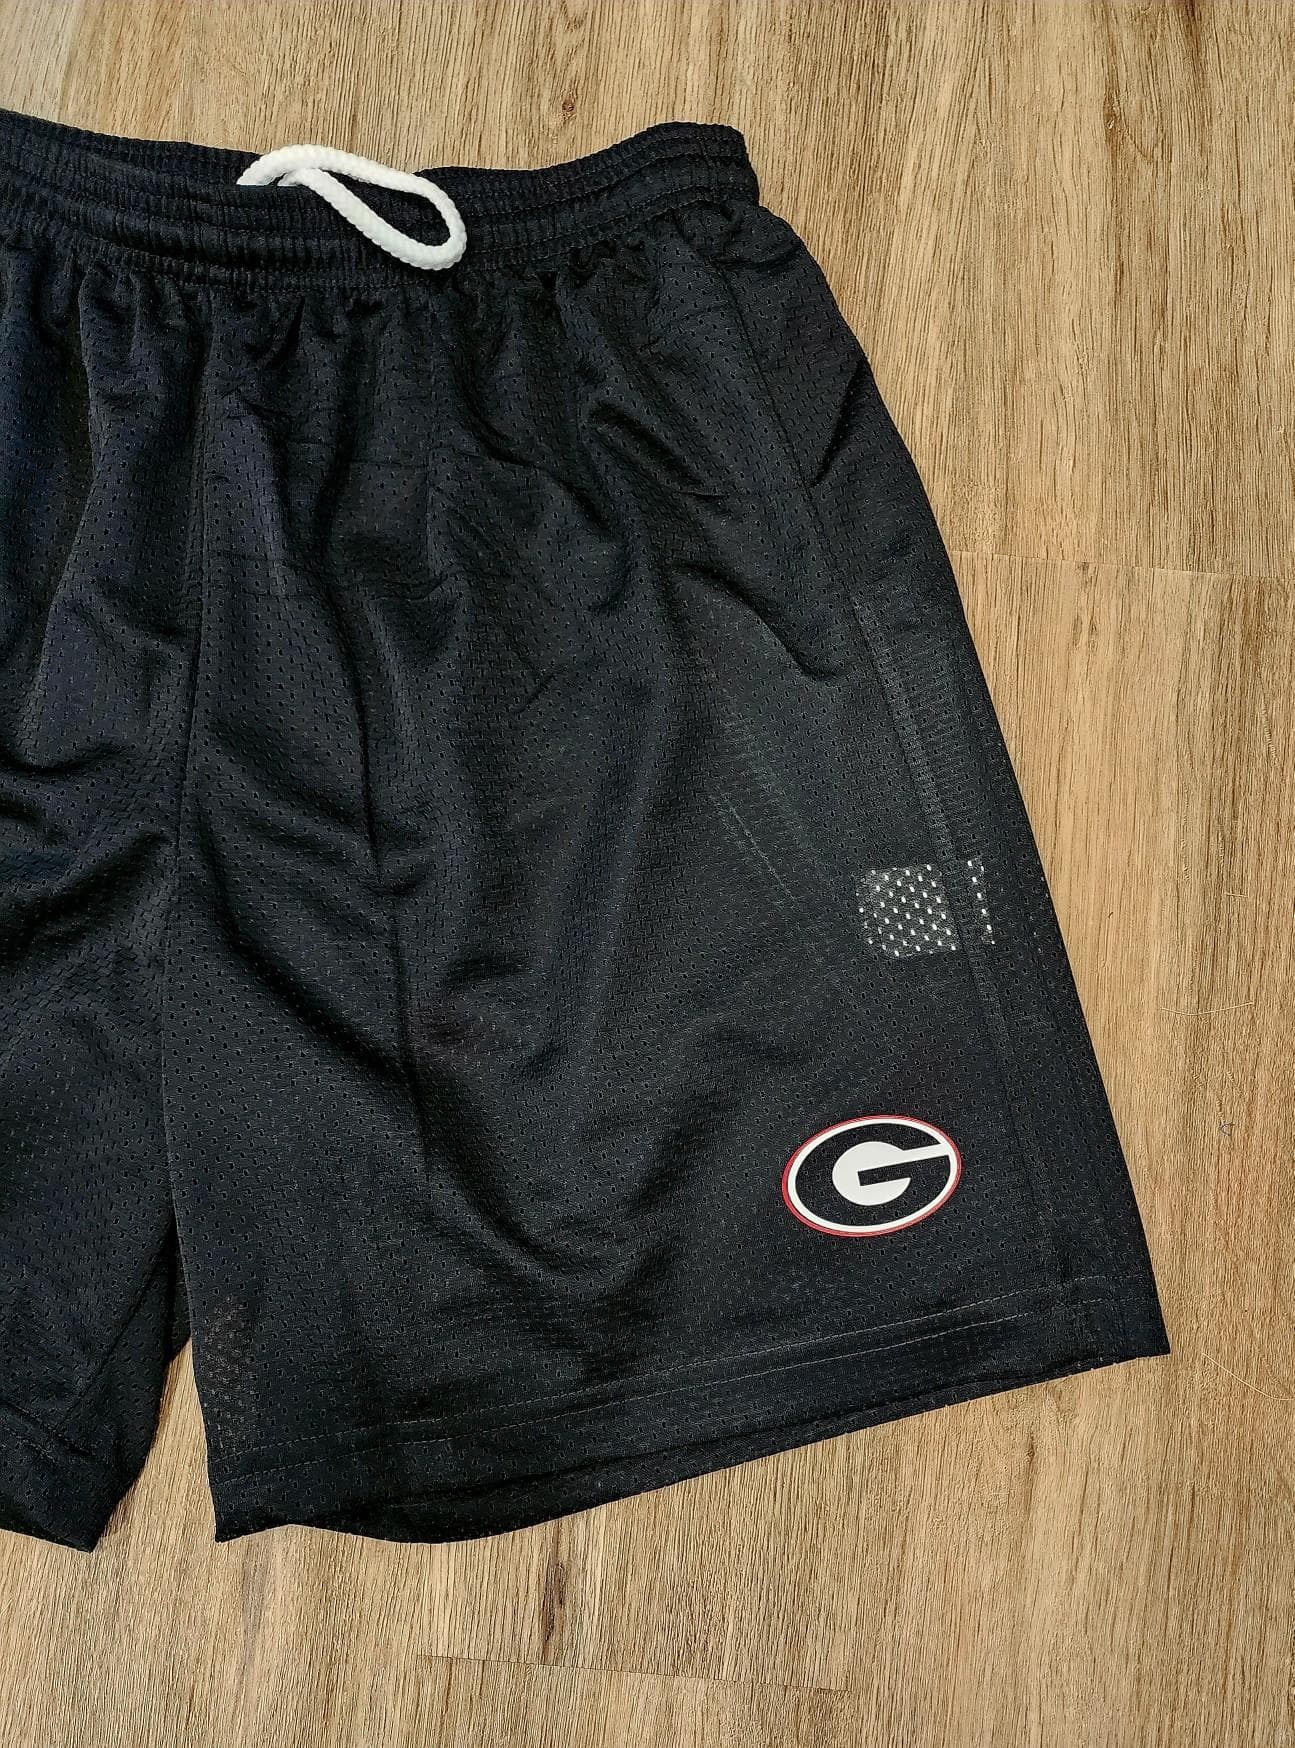 Georgia Bulldog Basketball Shorts